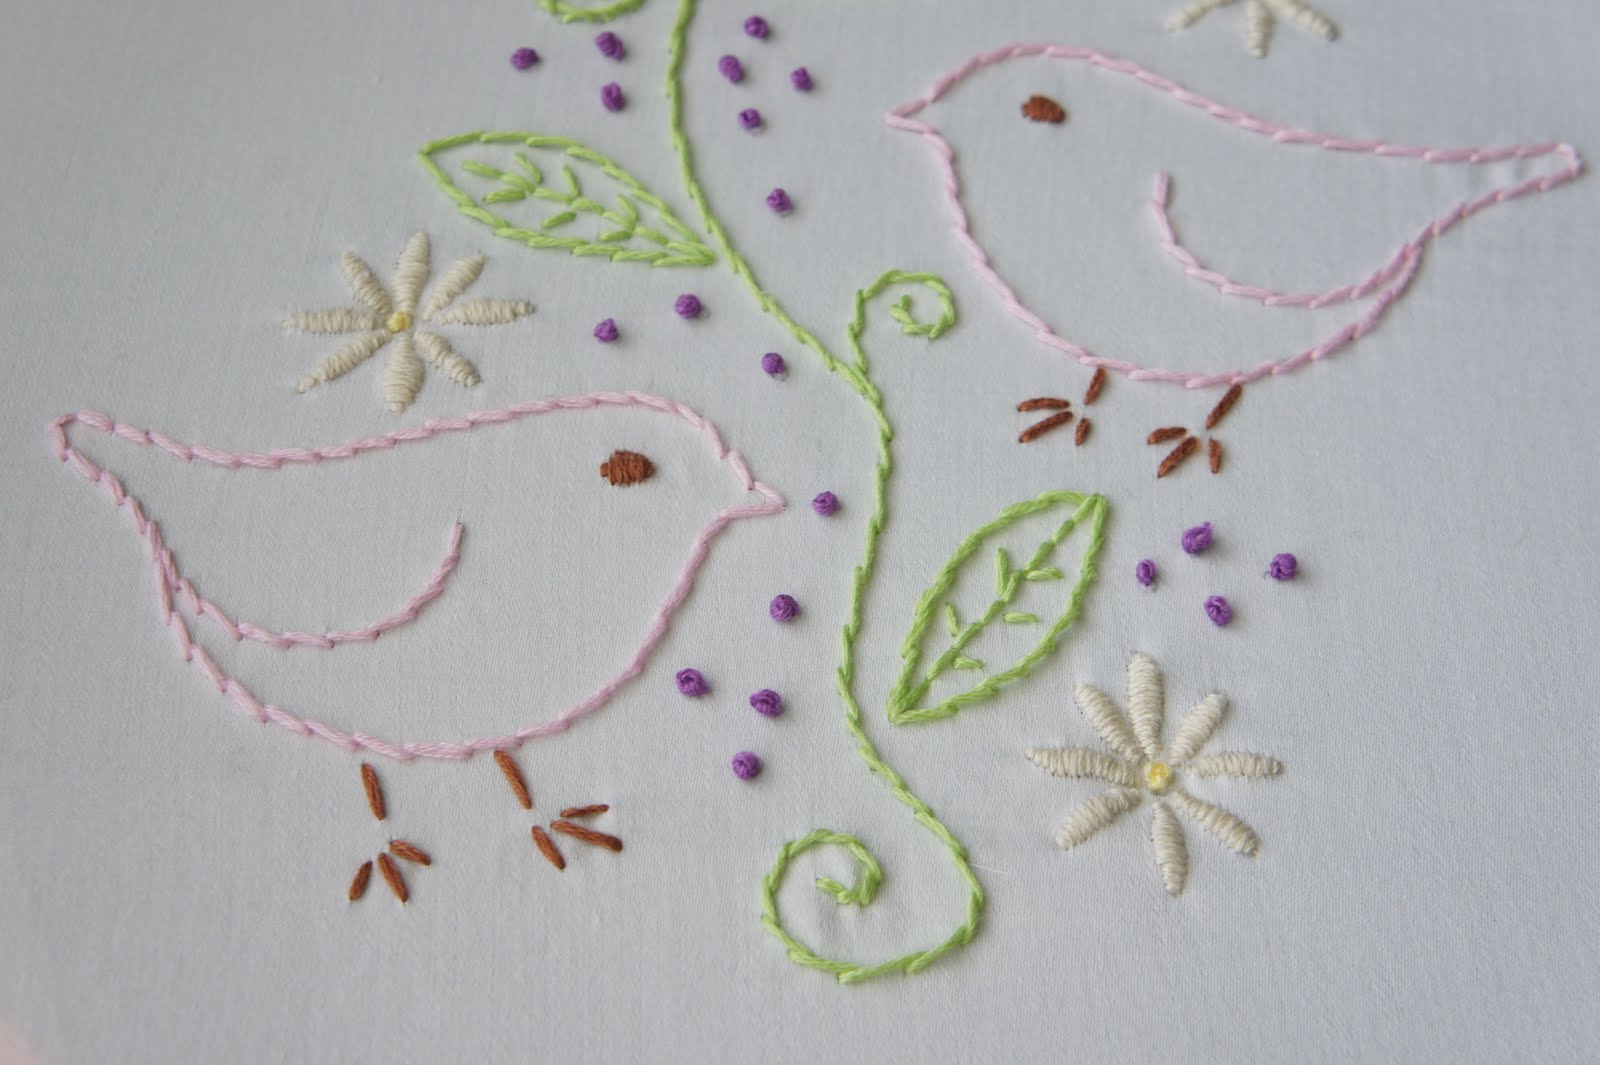 Free hand-embroidery patterns В· Needlework News | CraftGossip.com